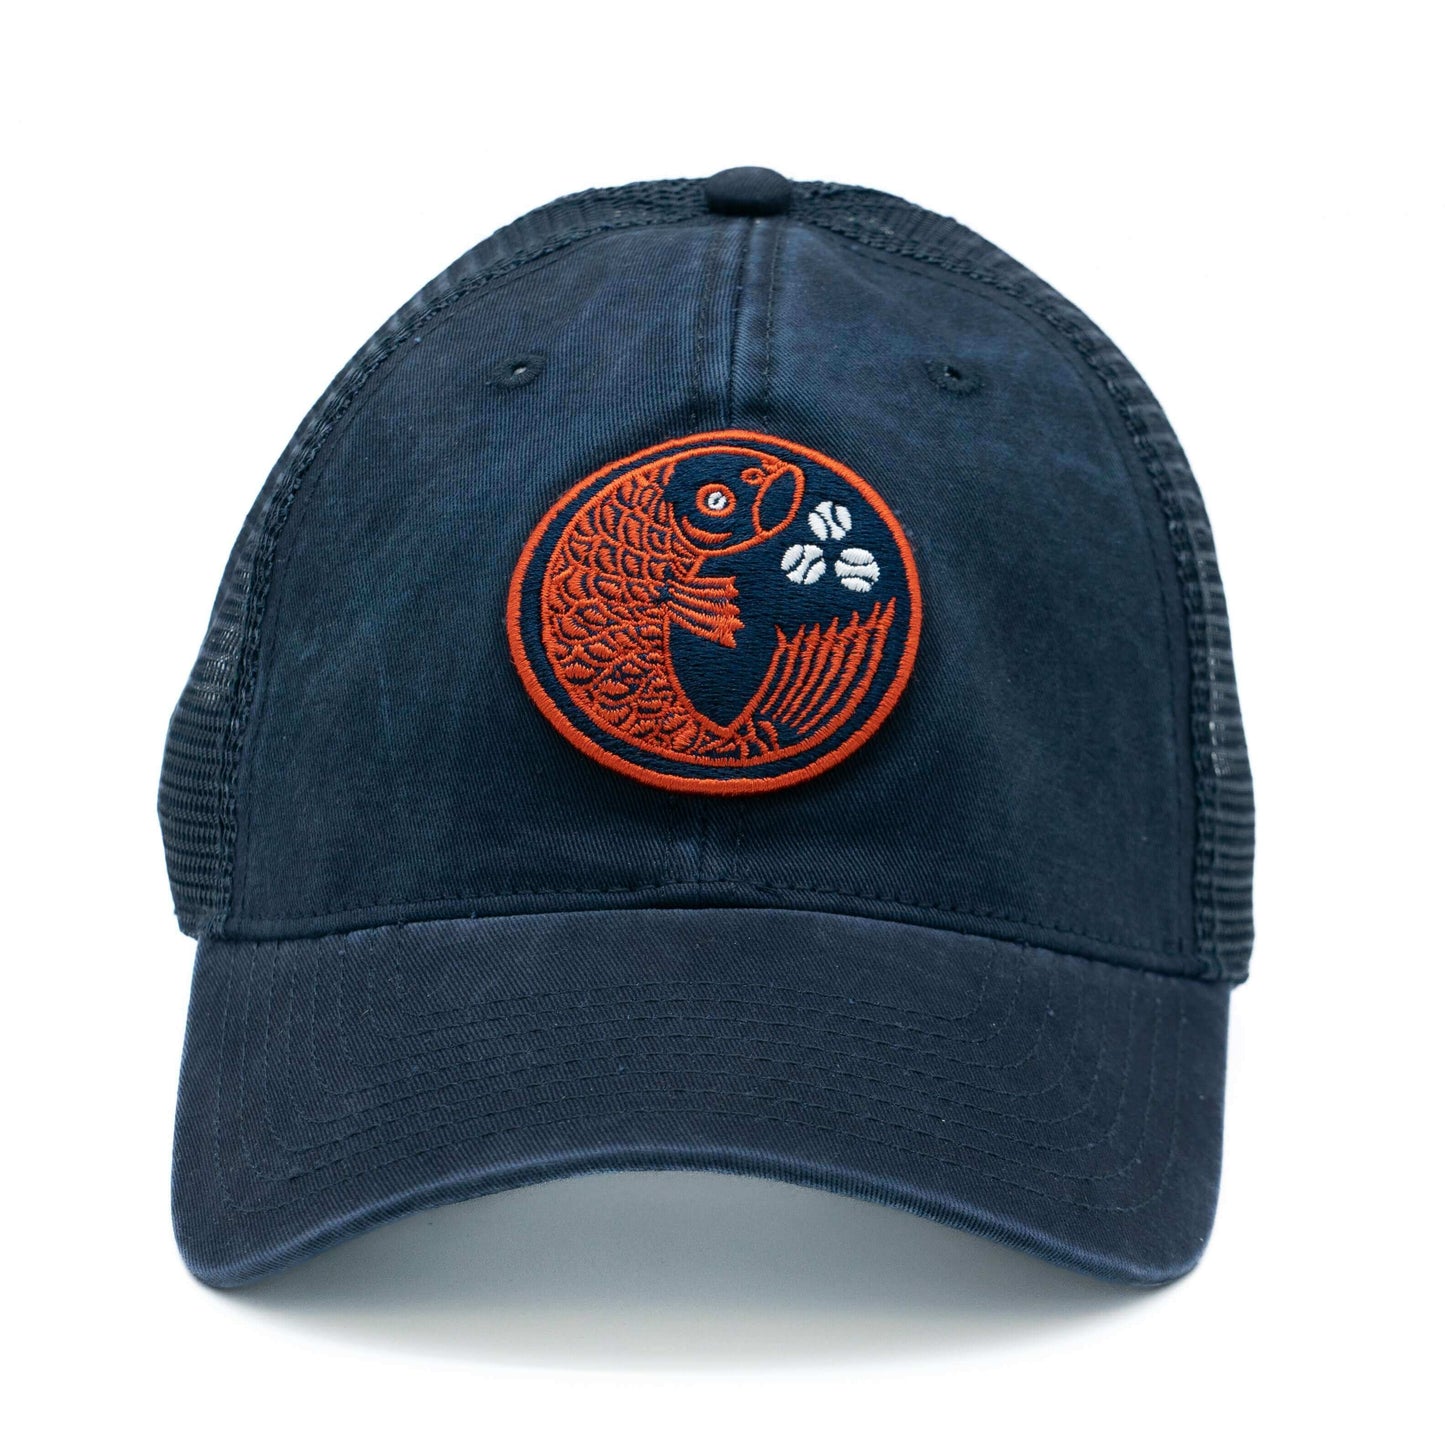 Hiroshima Toyo Carp Hats: Vintage Trucker Hat | Japanese Baseball